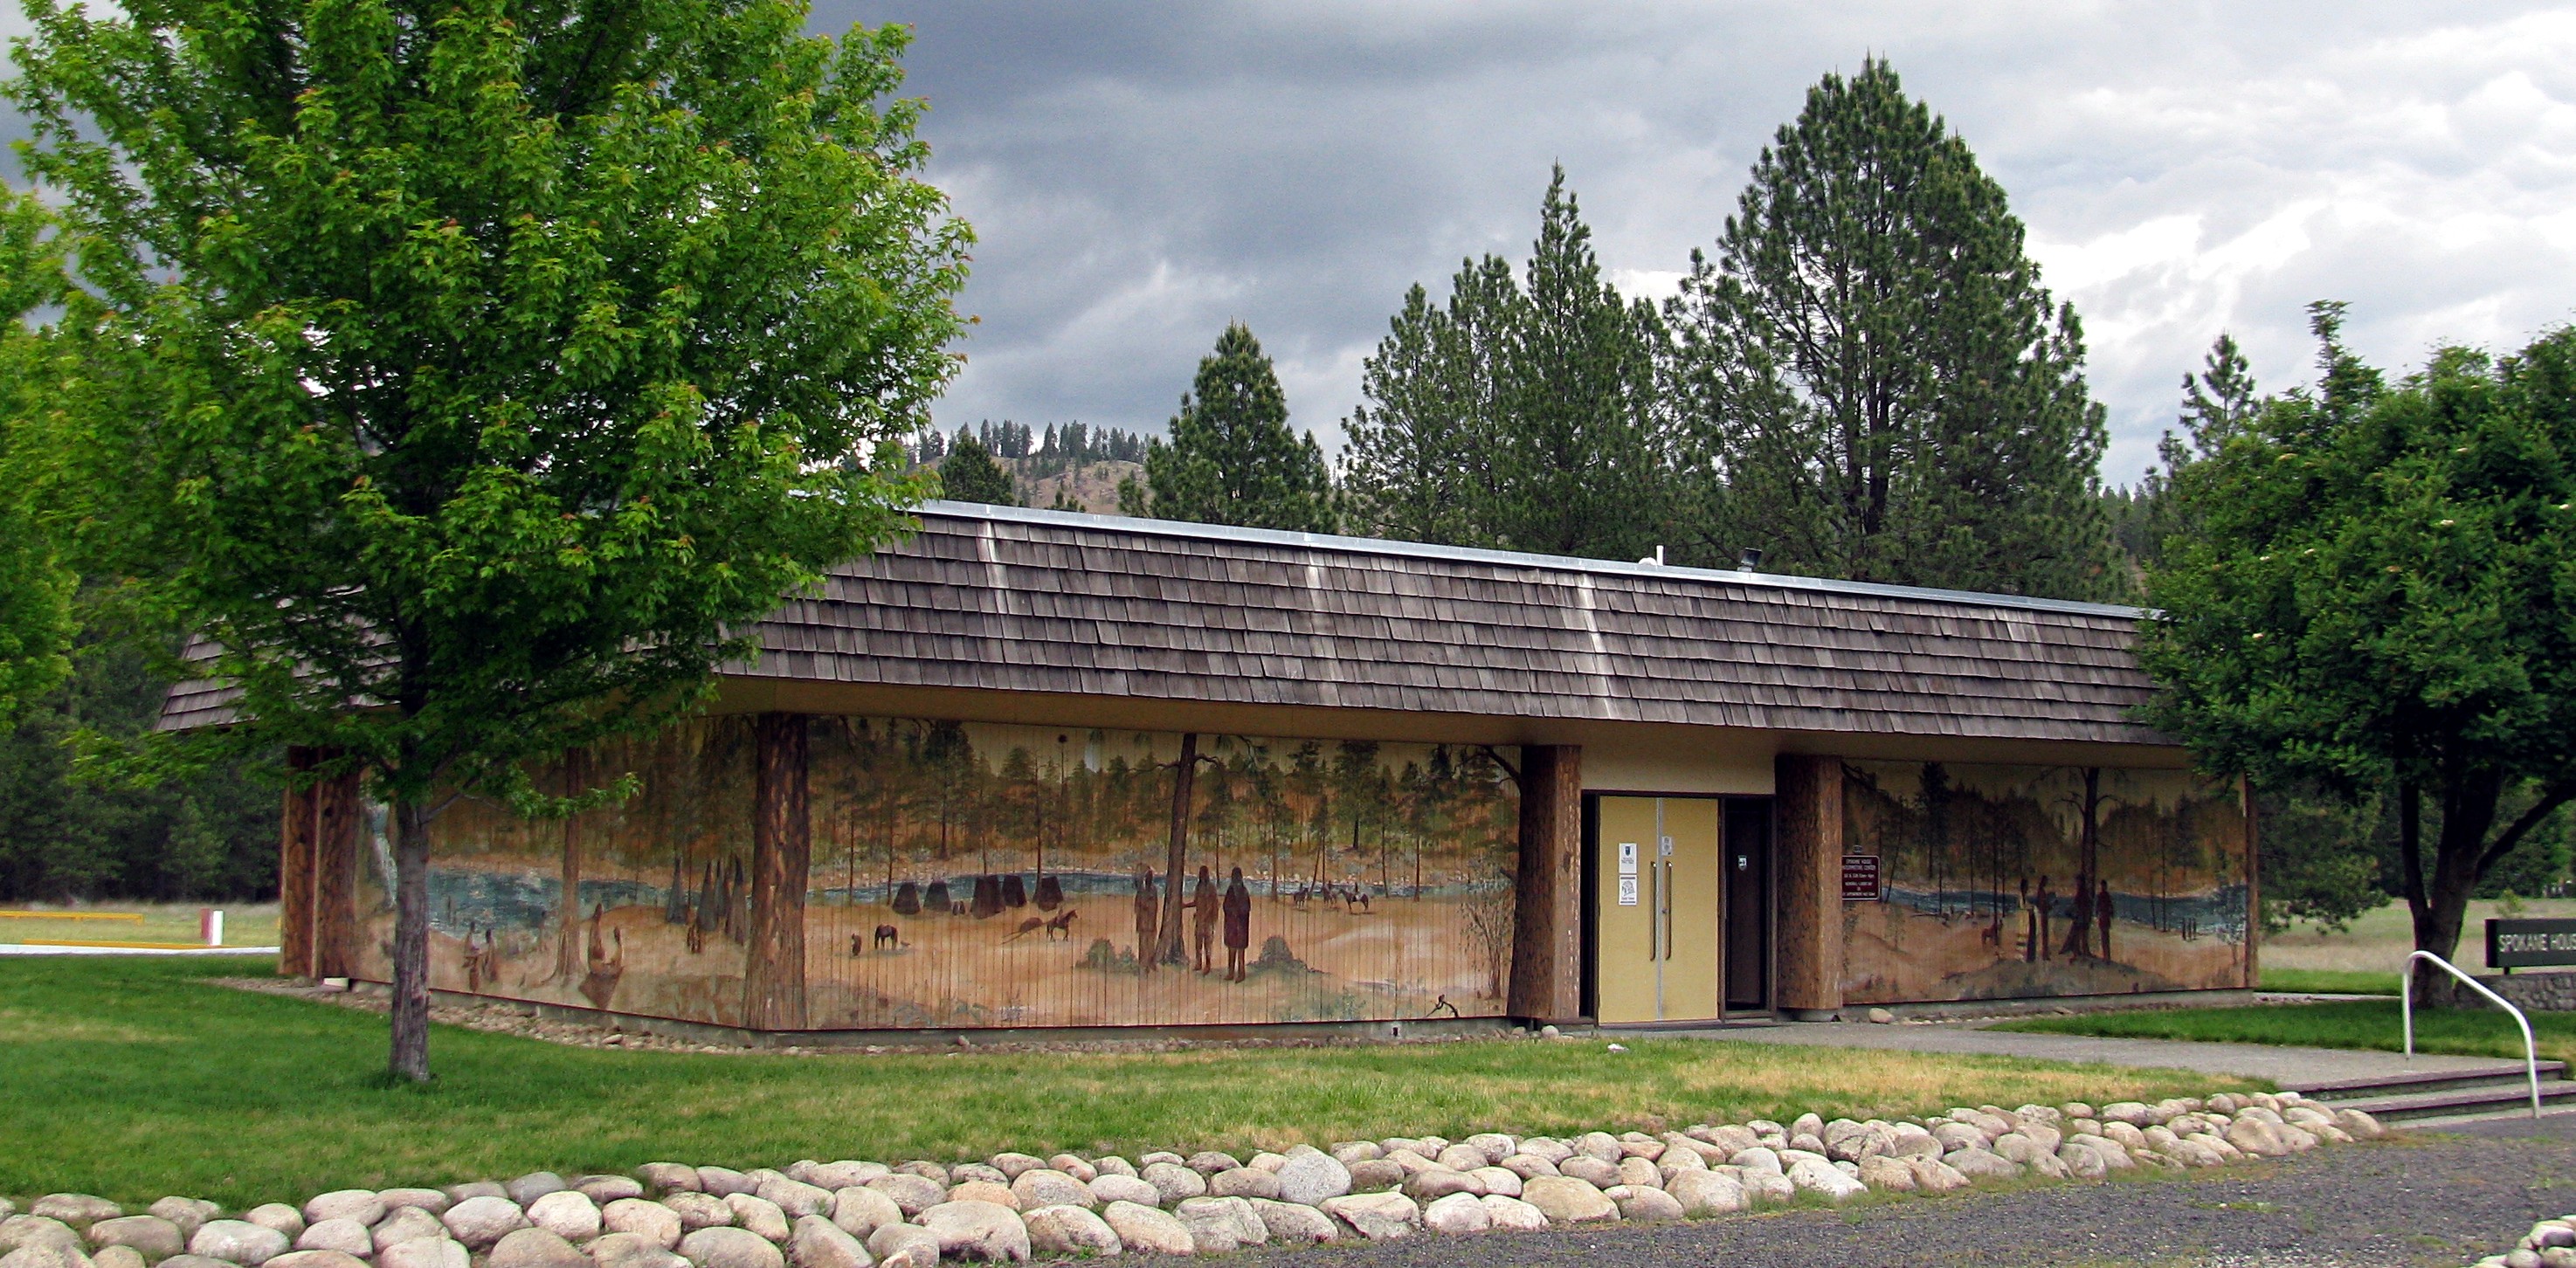 Spokane House Interpretive Center